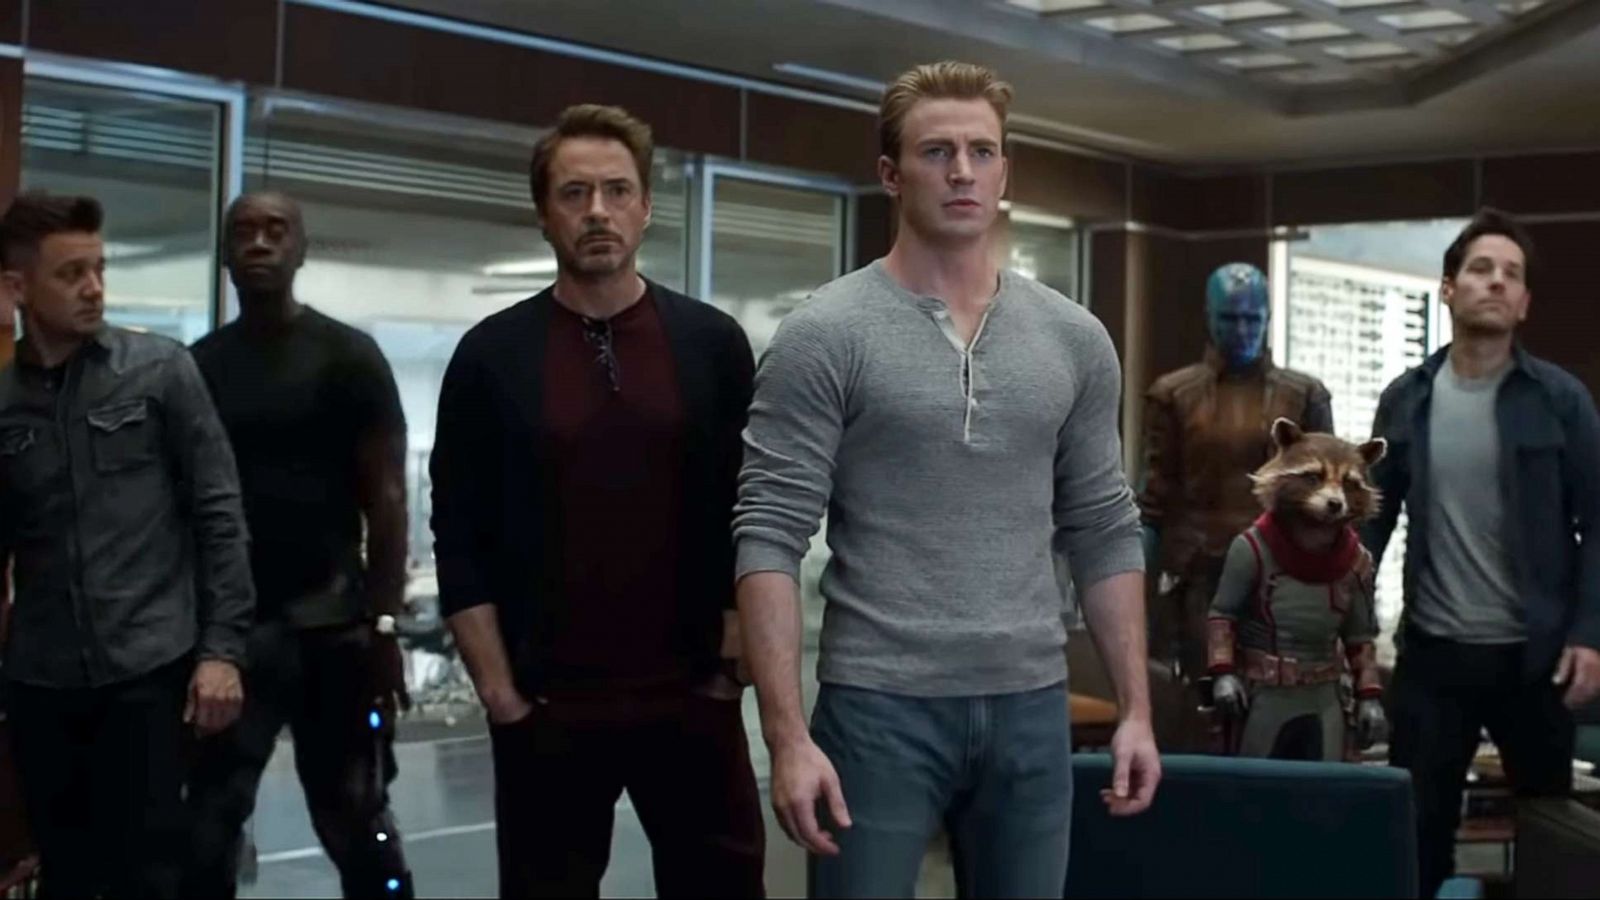 Netflix & Chill: Avengers Endgame — STATIC at IUP